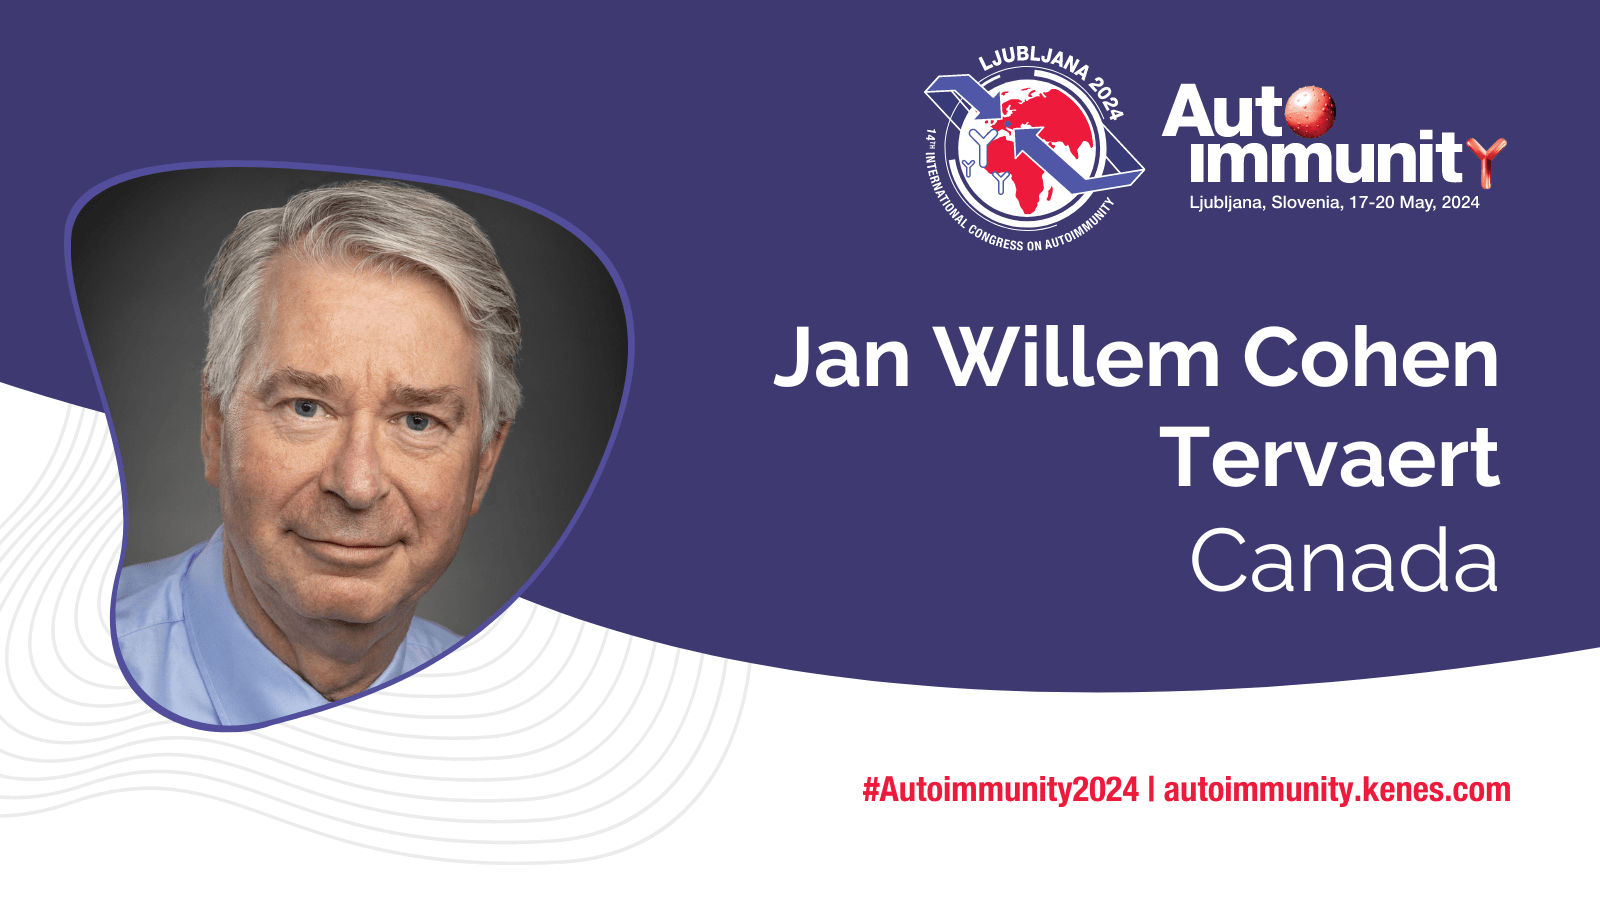 International Congress on Autoimmunity 2024 Speaker Jan Willem Cohen Tervaert